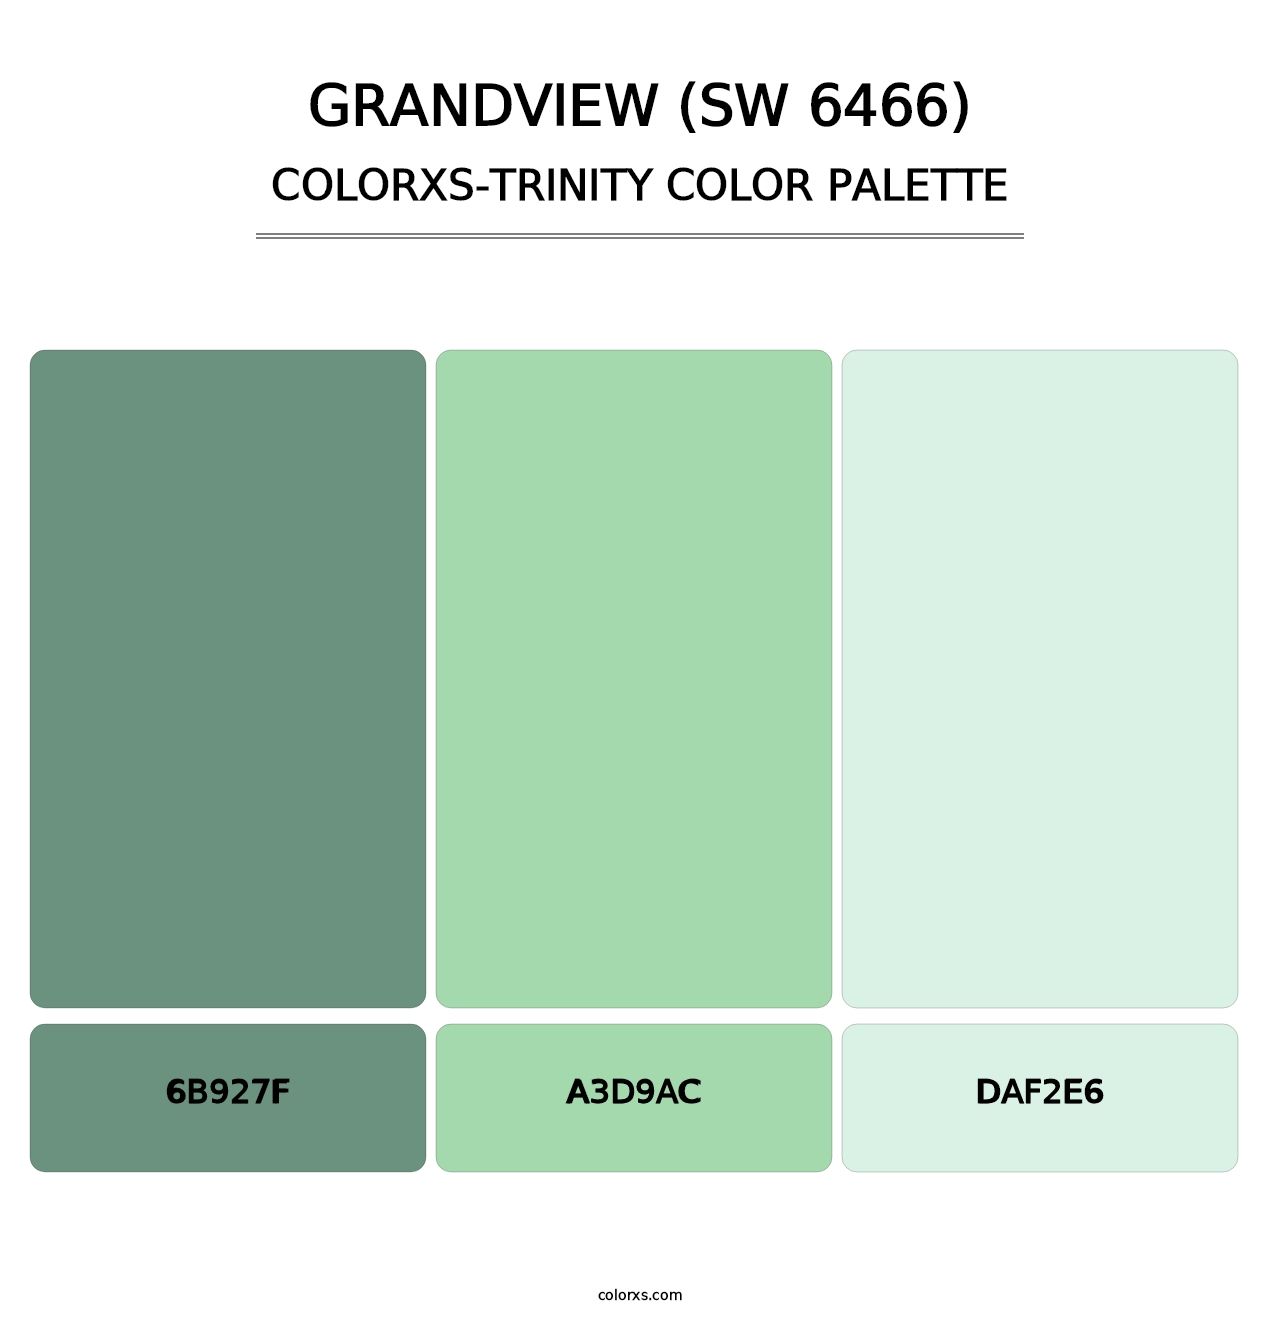 Grandview (SW 6466) - Colorxs Trinity Palette